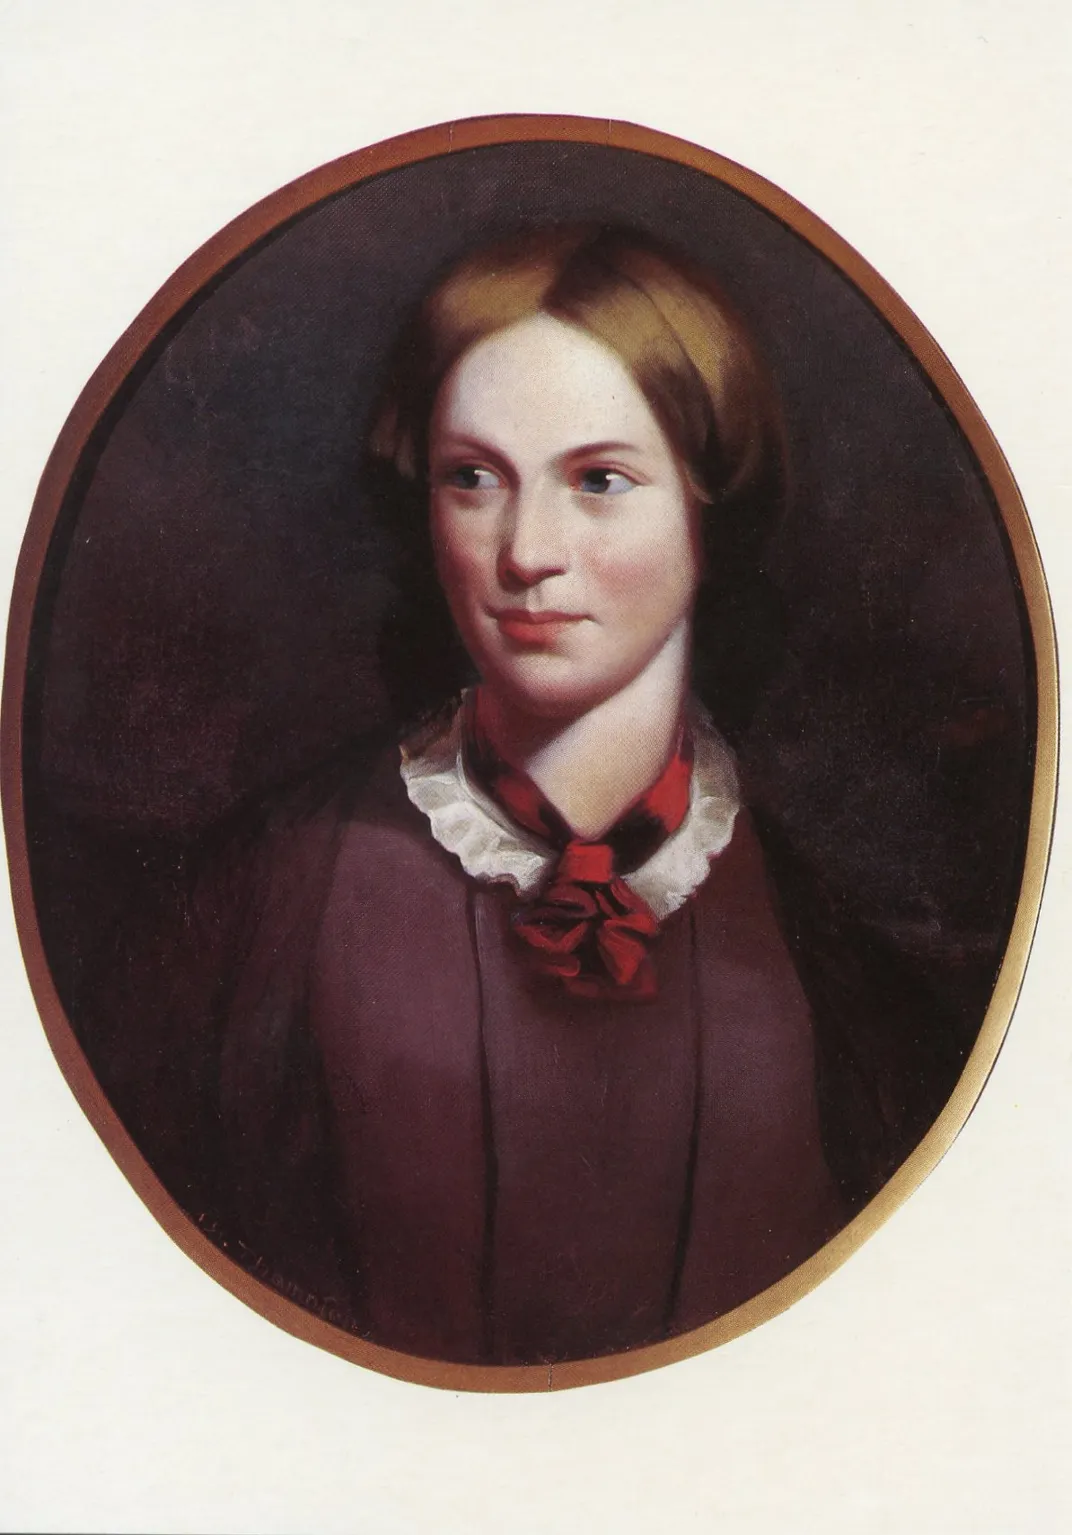 A portrait of Charlotte Brontë by J.H. Thompson